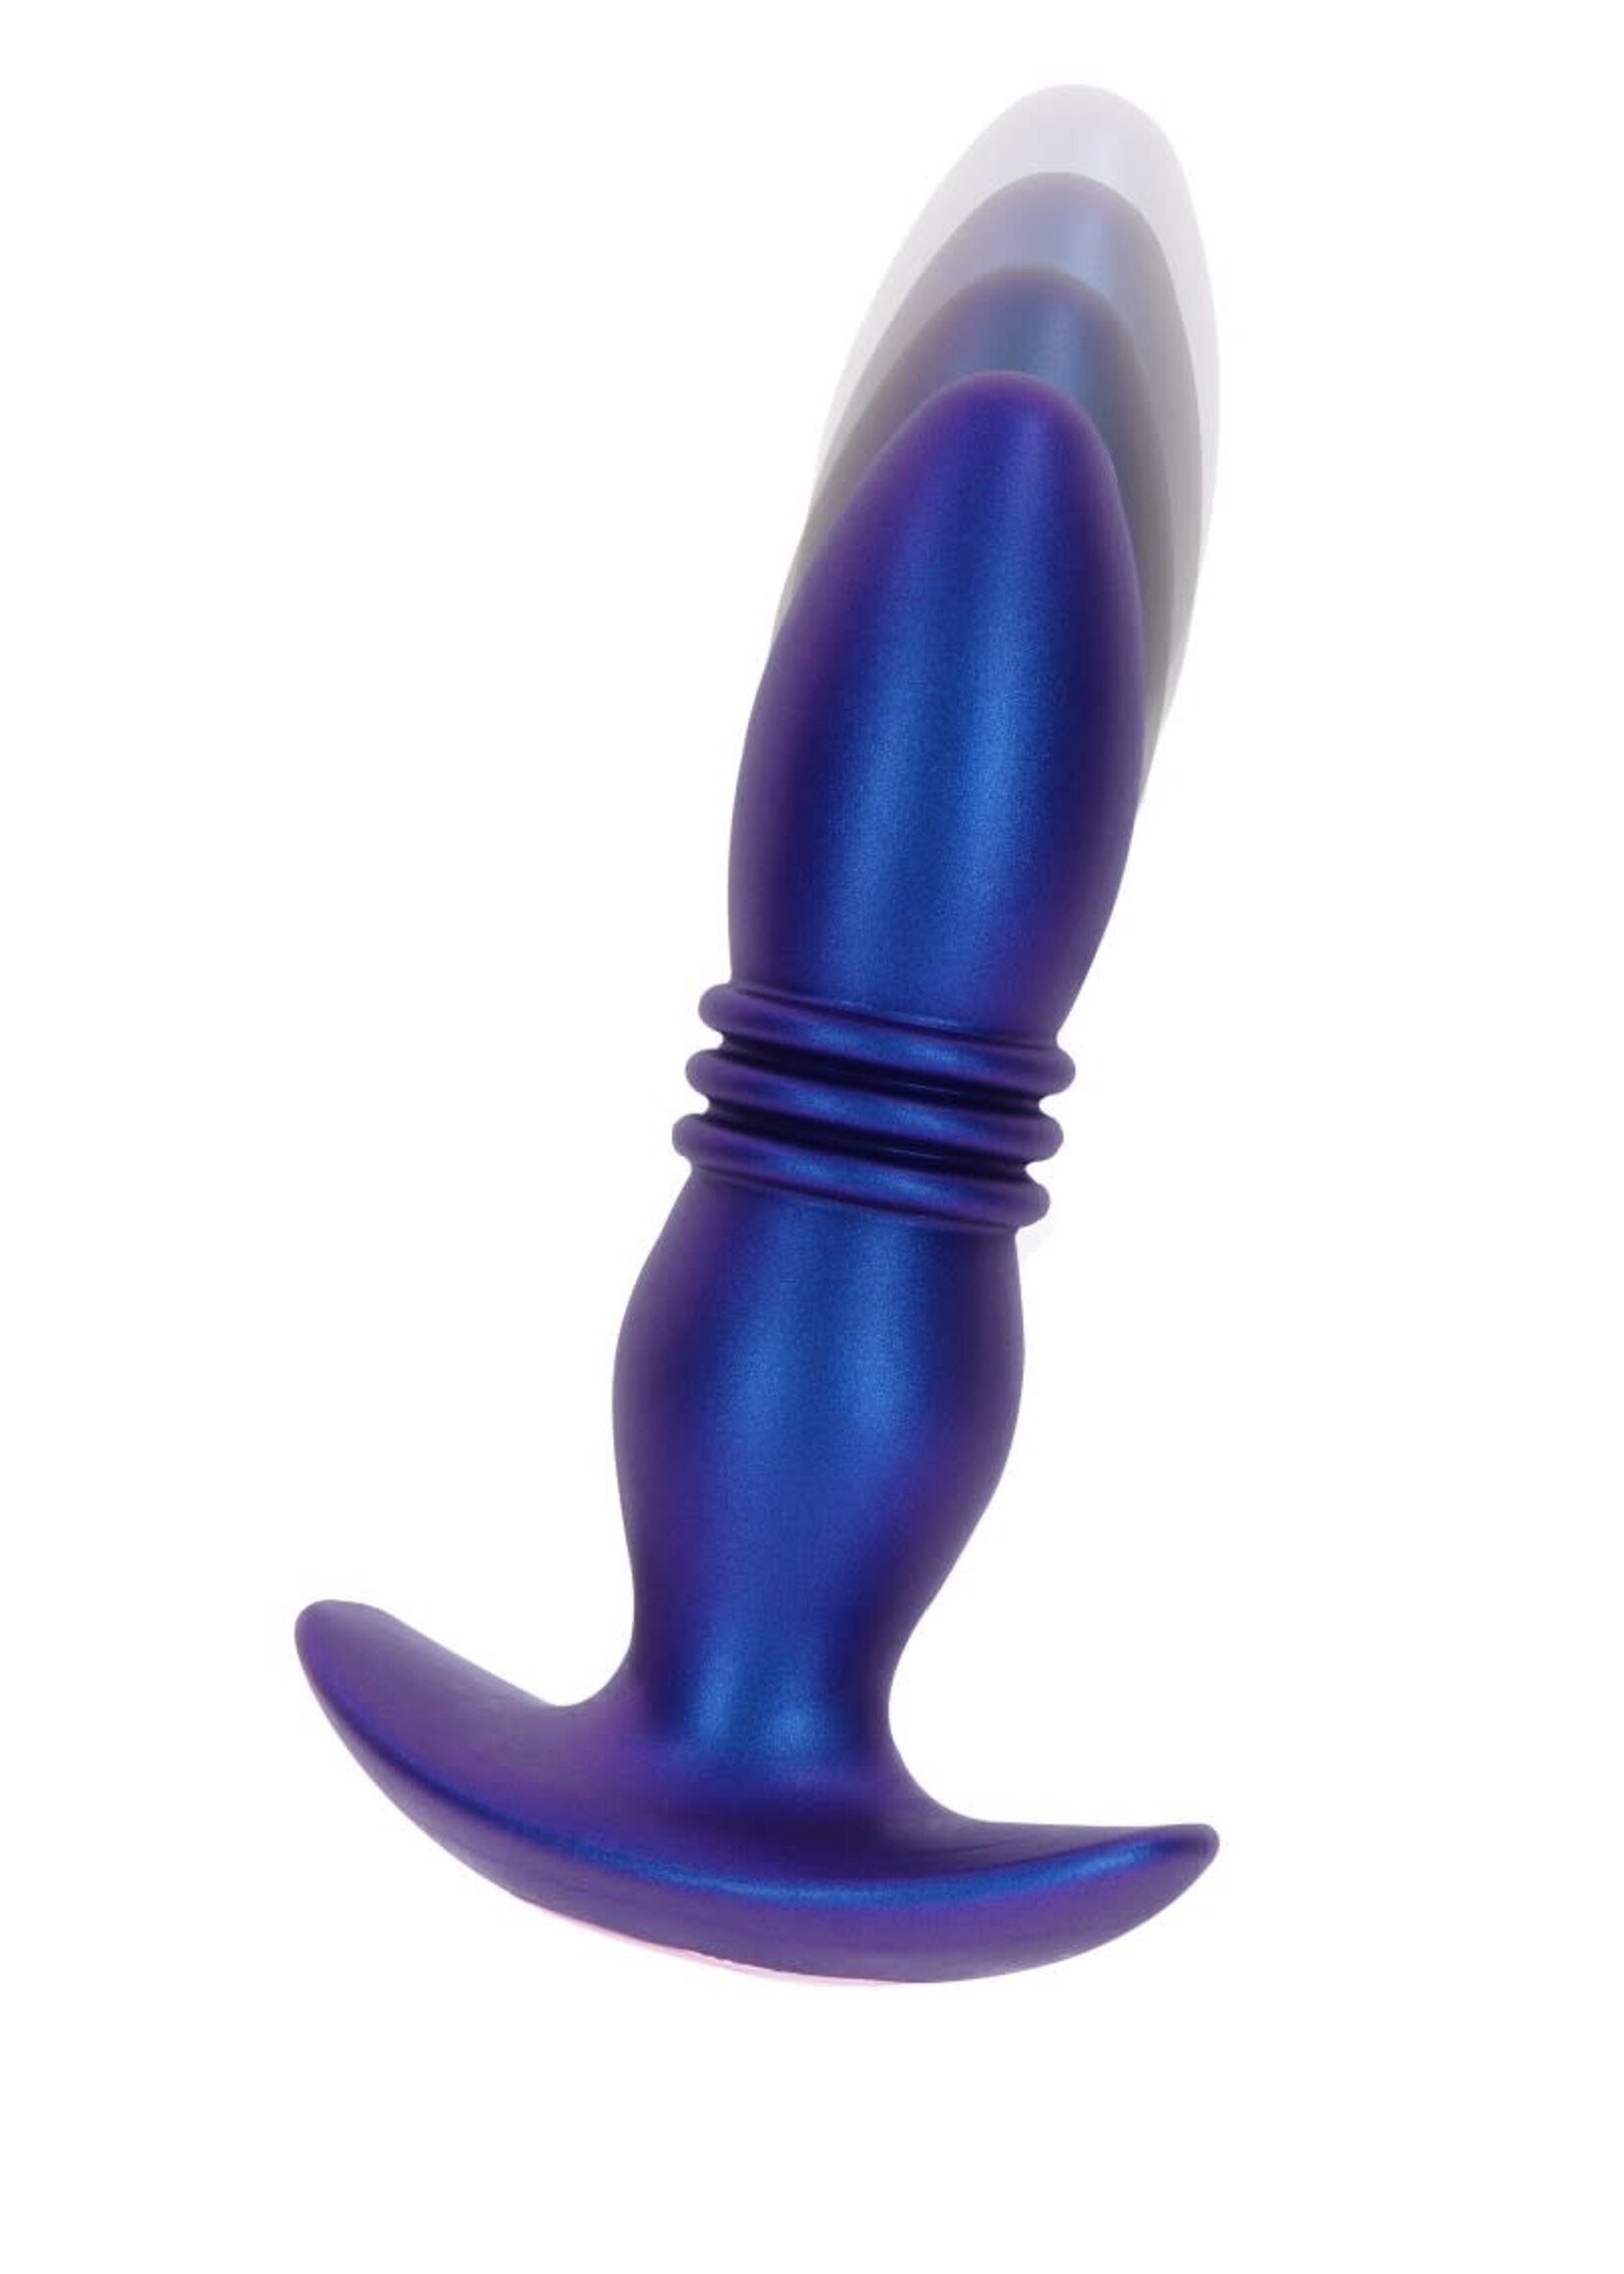 ToyJoy Thrusting vibrating anal plug